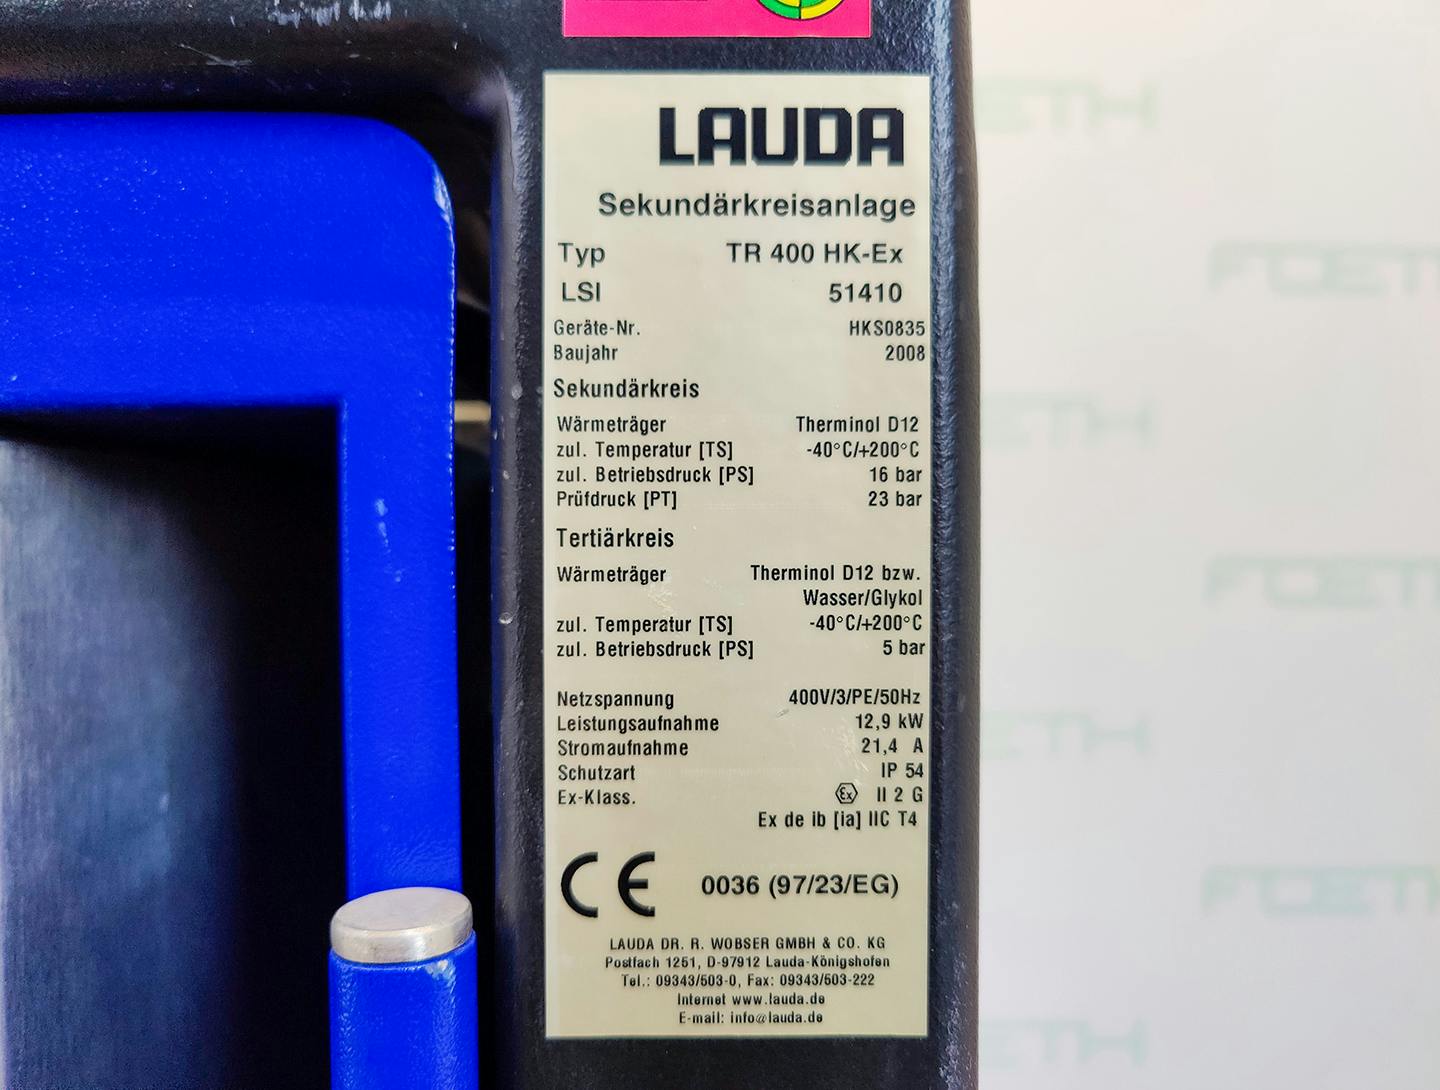 Lauda TR400 HK-EX "secondary circuit system" - Chladic recirkulacní - image 7